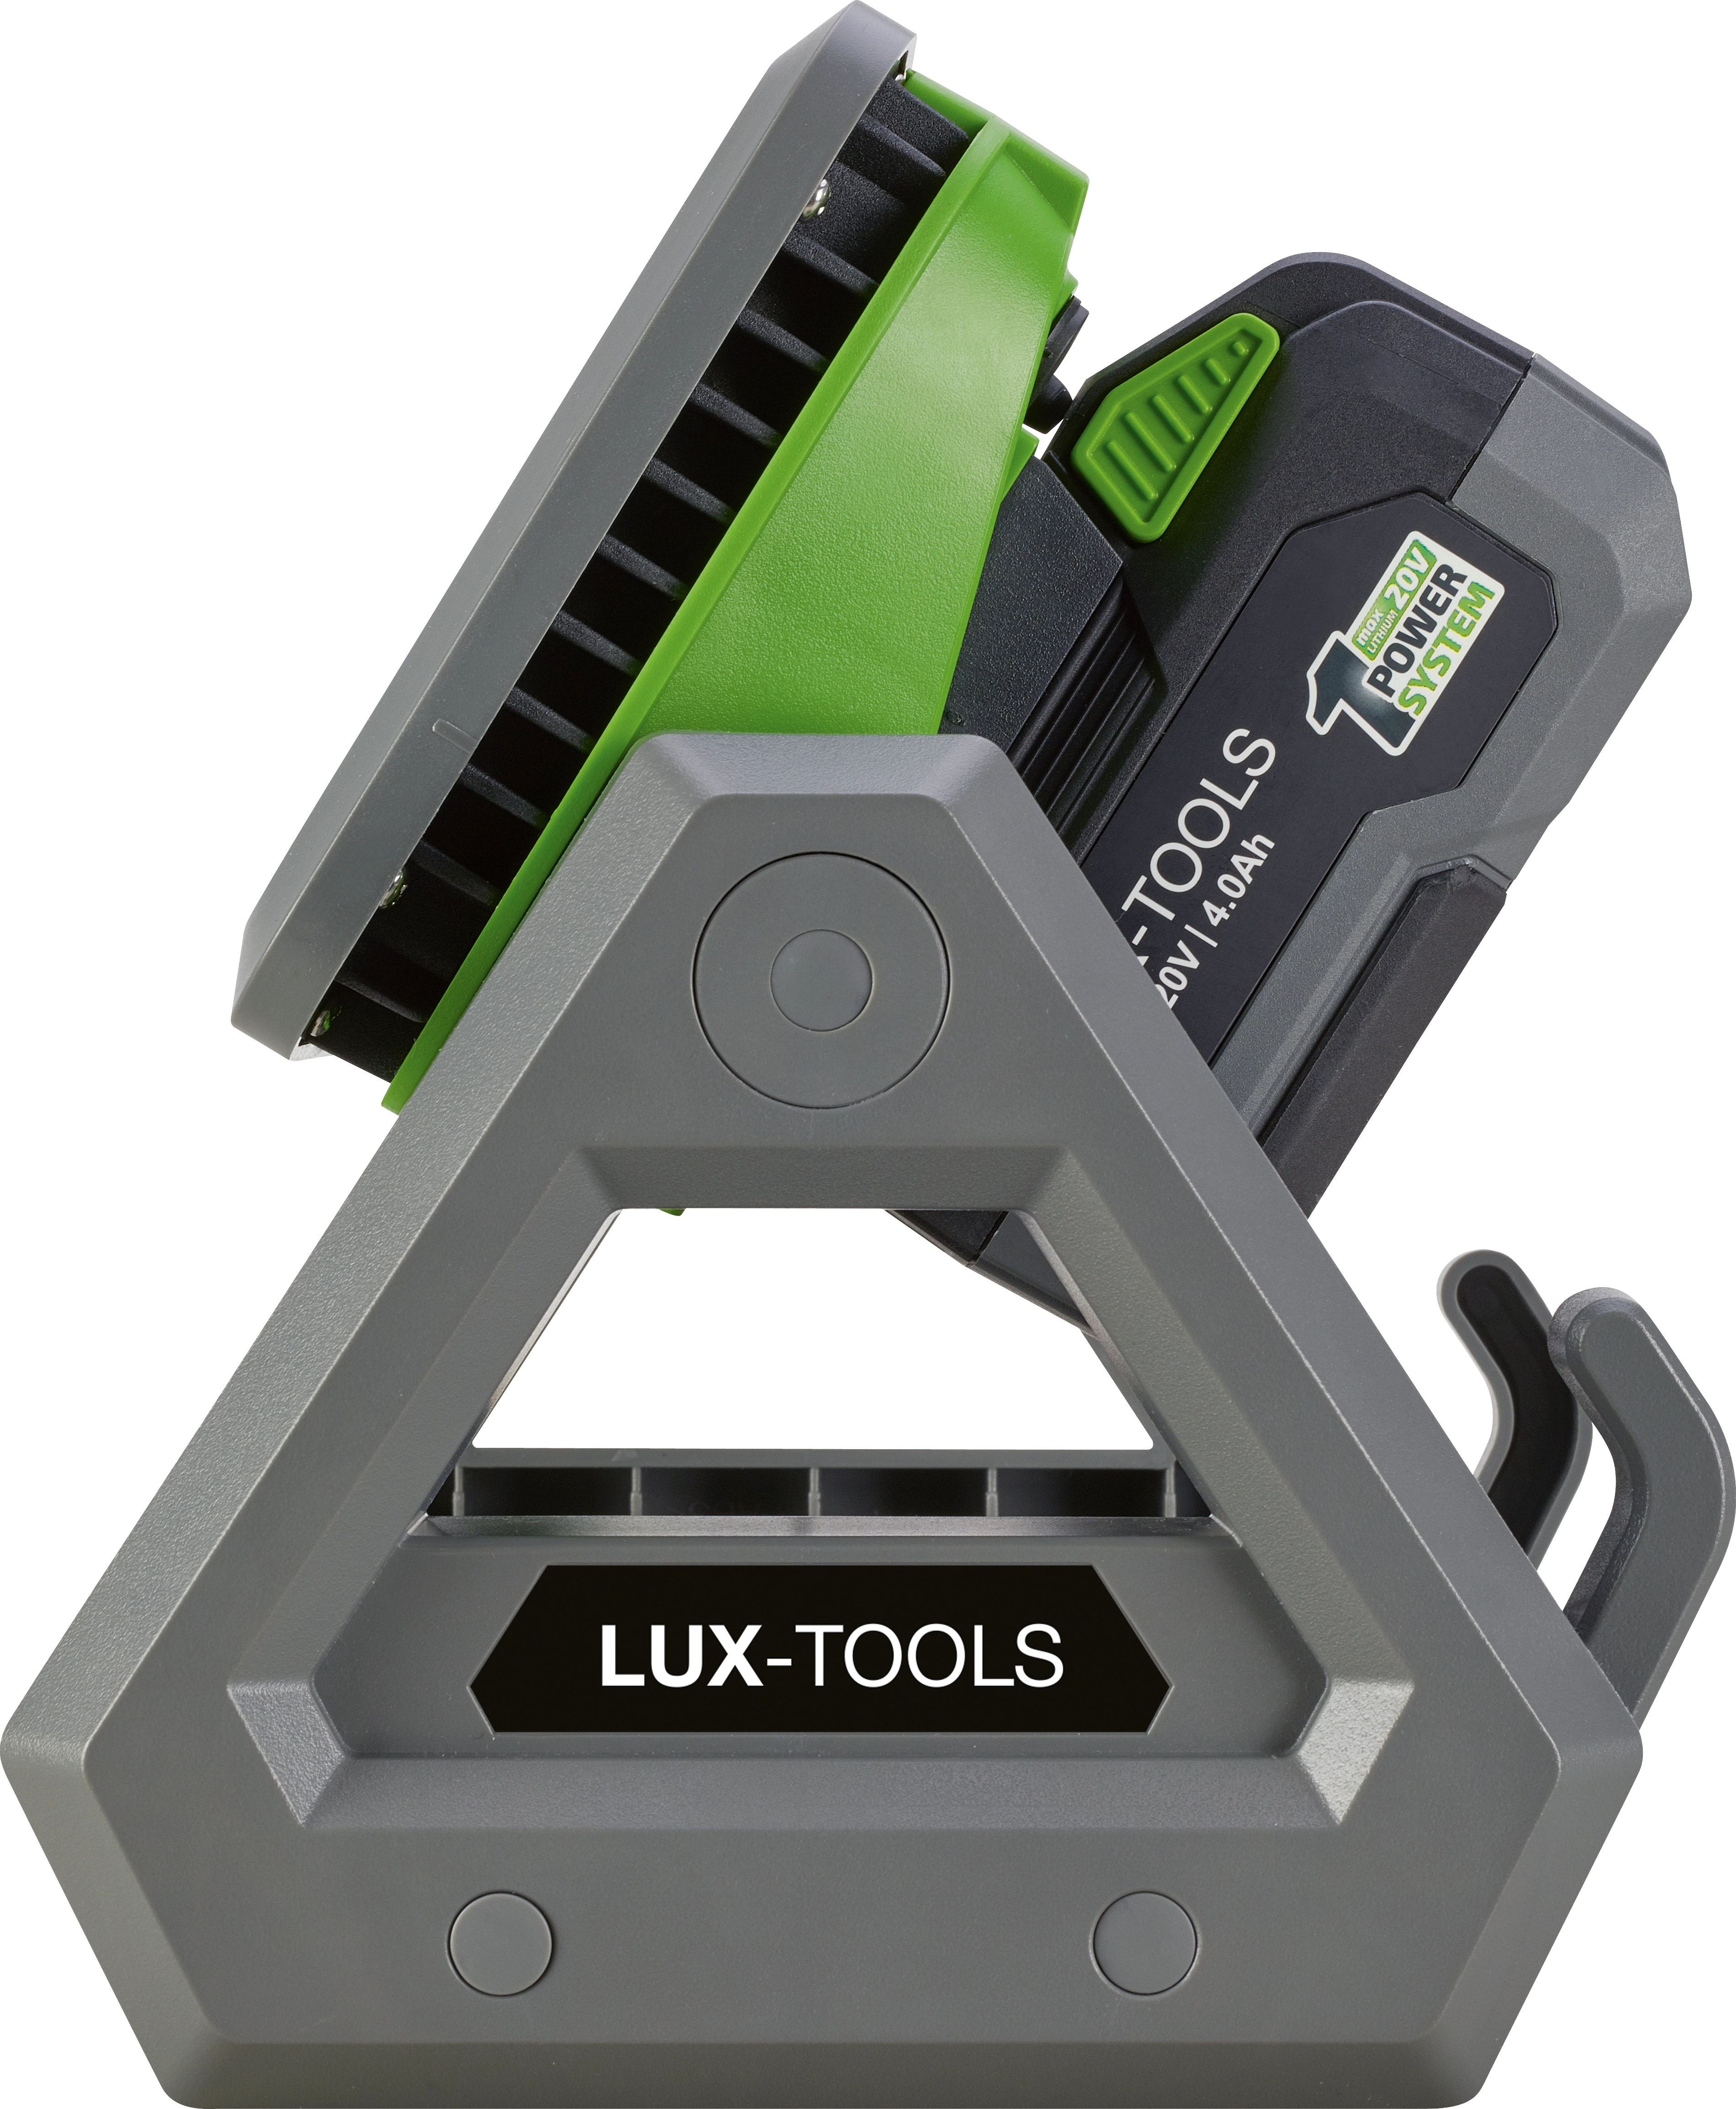 LUX Akku-Arbeitsleuchte 1PowerSystem A-AL-20 Solo kaufen bei OBI